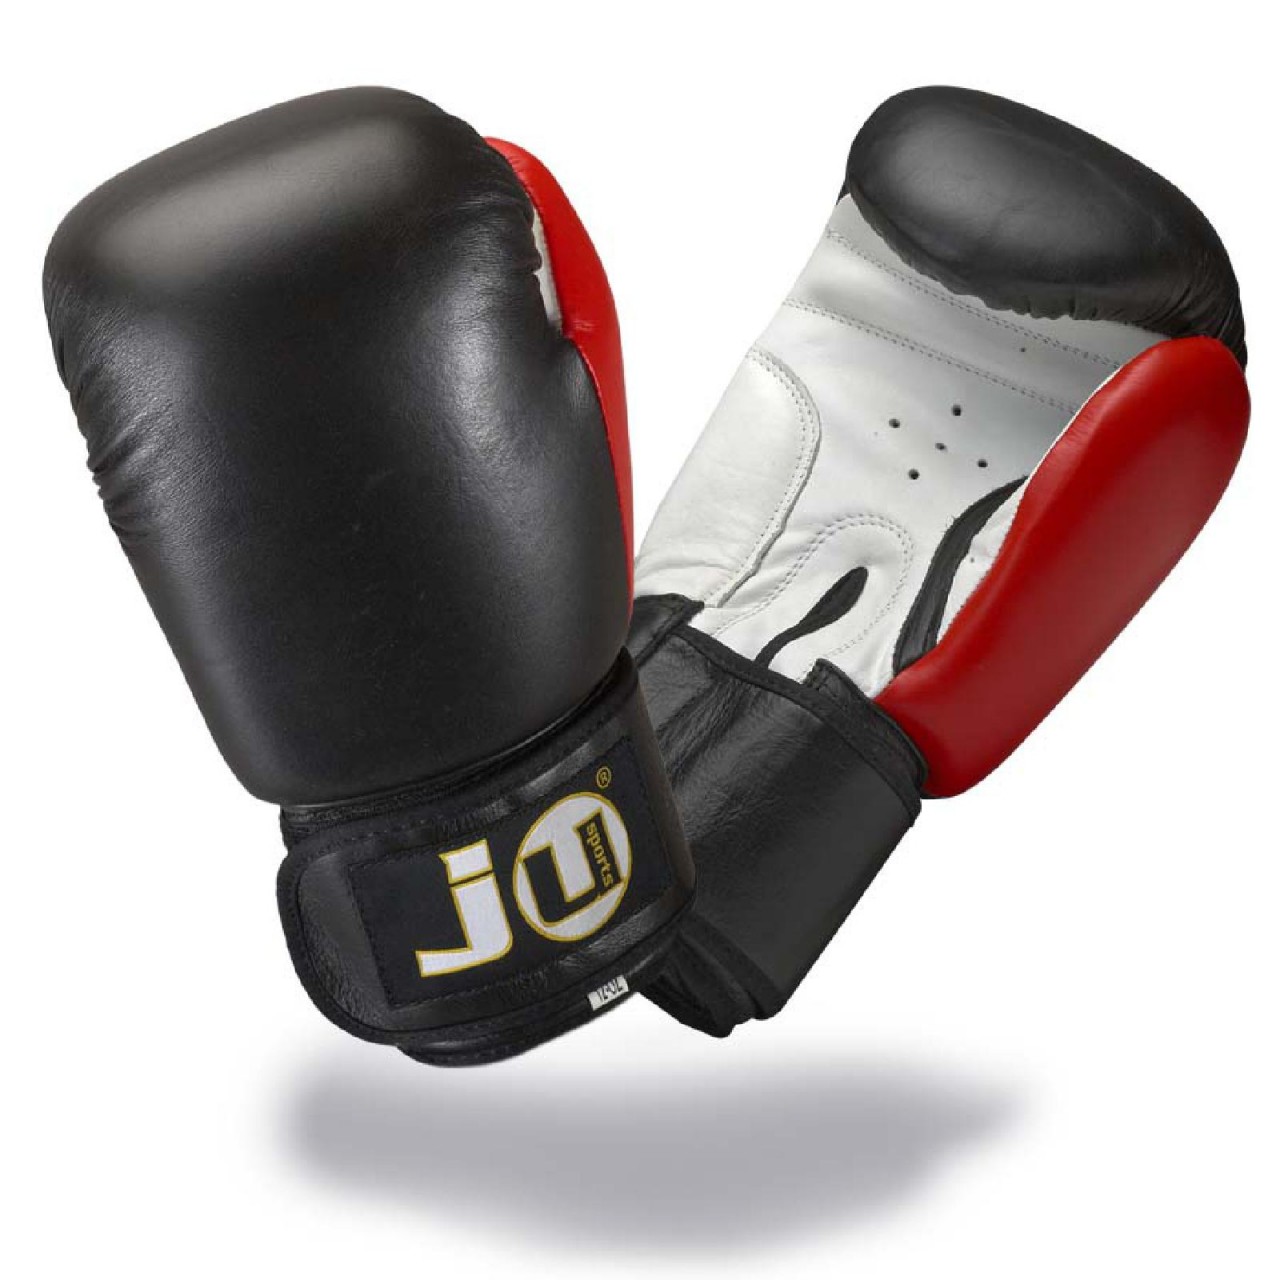 Ju-Sports Boxhandschuhe Leder plus von JU - SPORTS